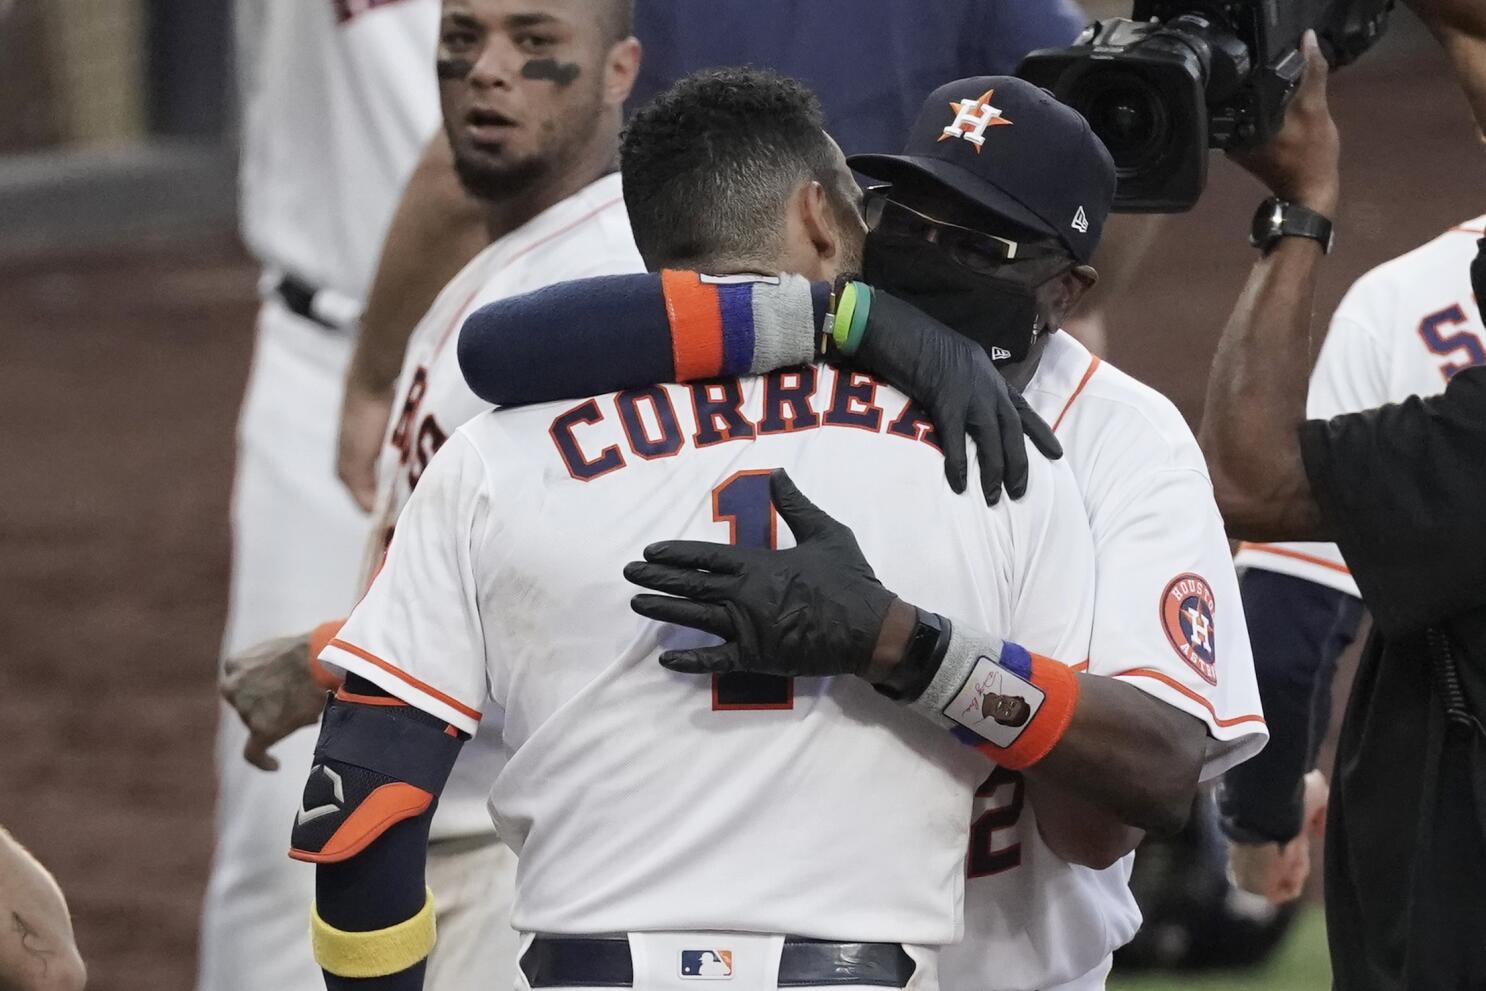 Astros' Carlos Correa's brother plays baseball